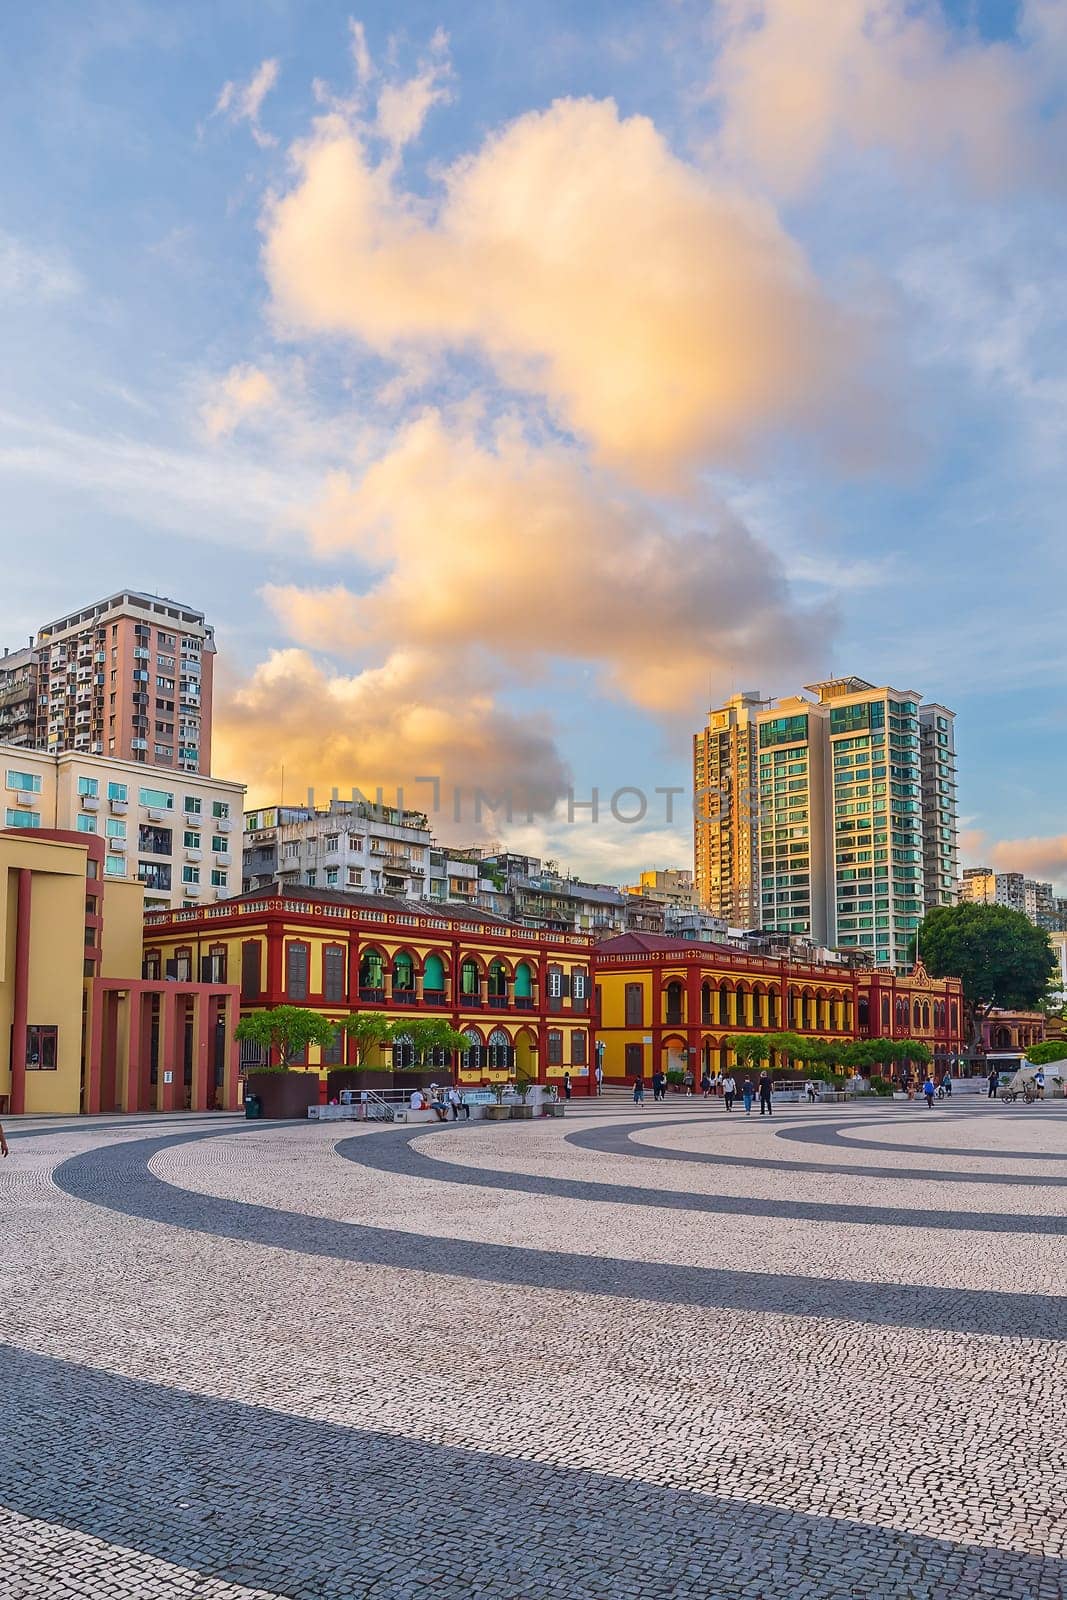 Tap Seac Square in Macau, China by f11photo